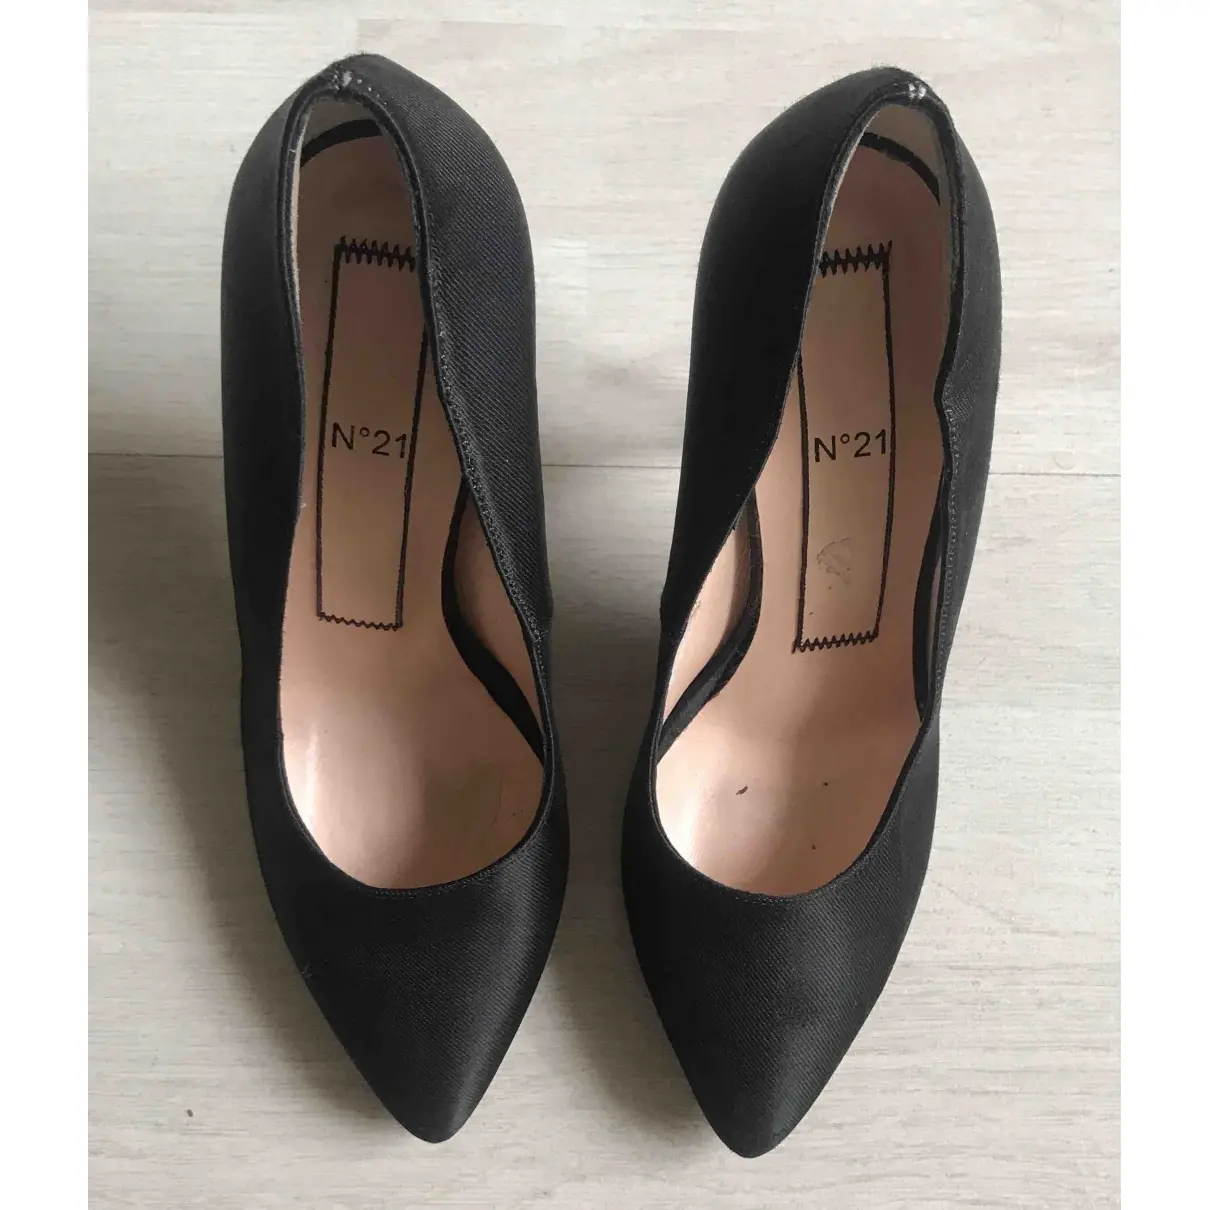 N°21 Cloth heels for sale